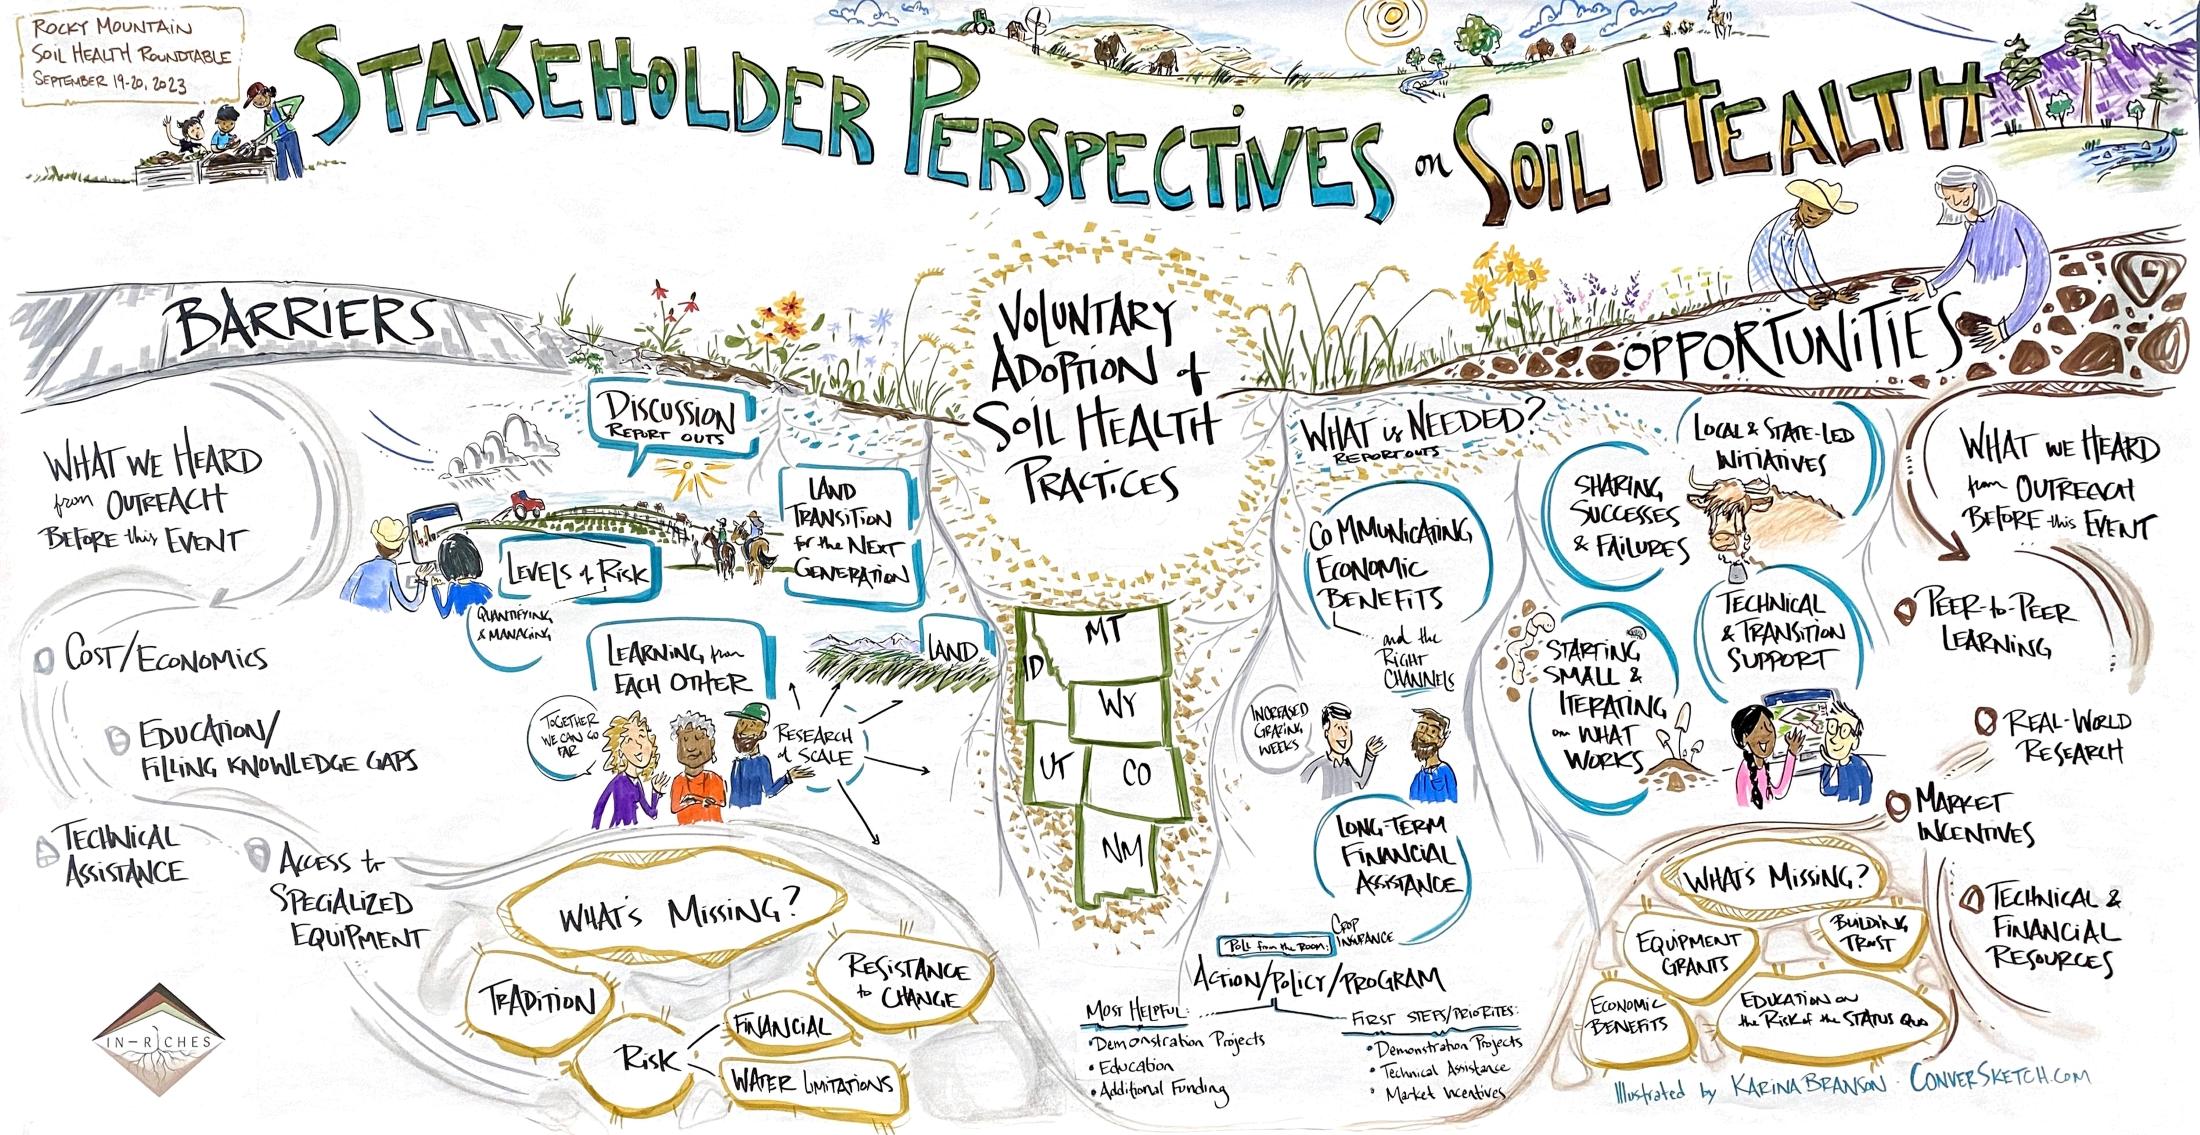 Stakeholder perspectives on soil health